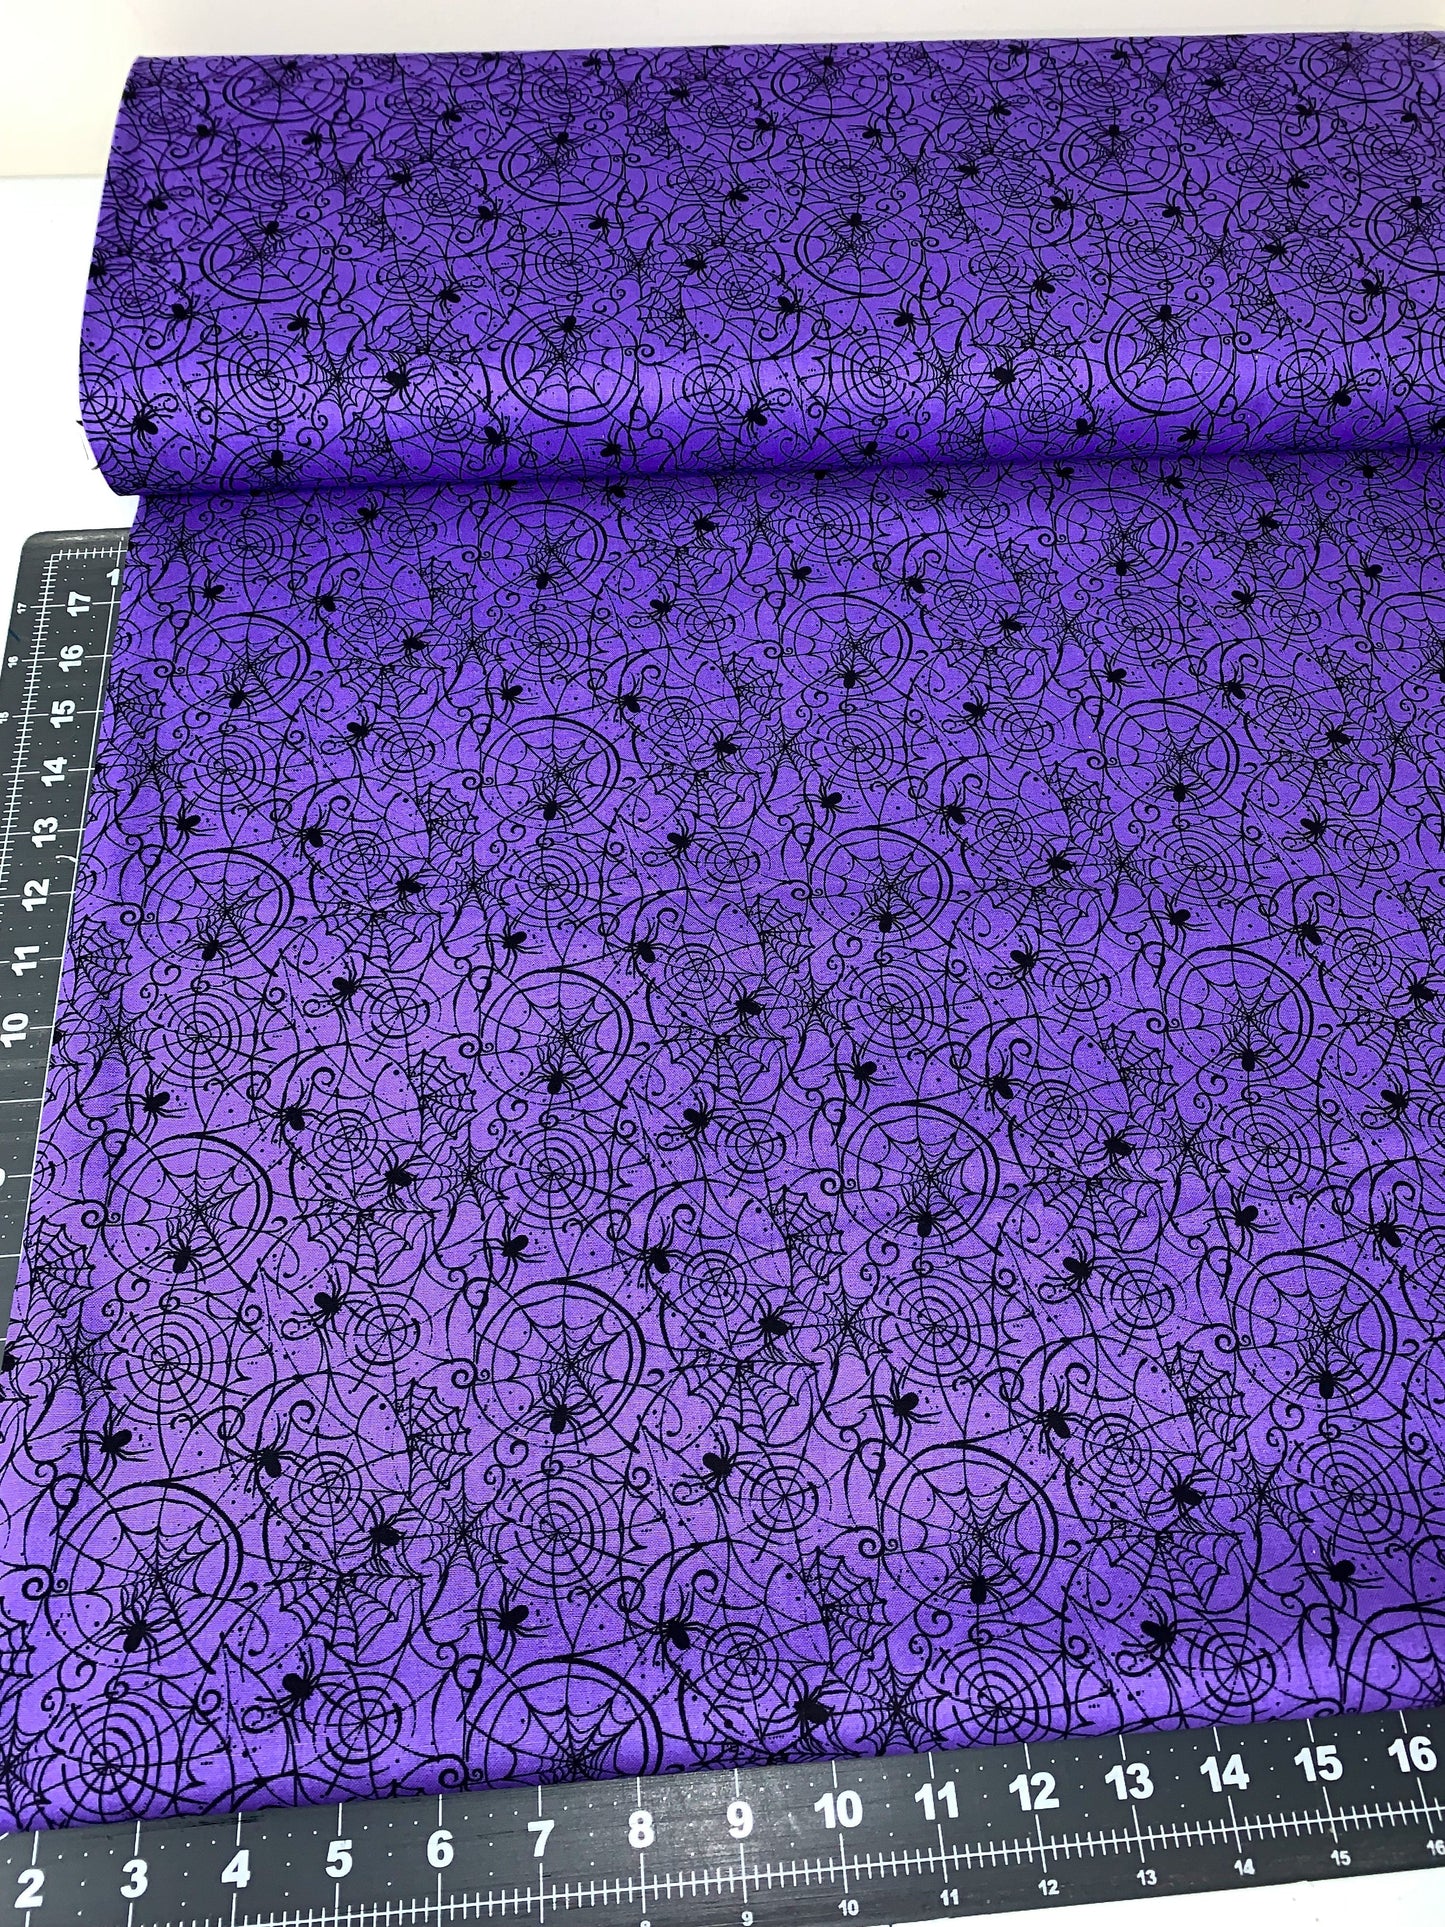 Black spider and spiderweb fabric 16662389 Purple Halloween fabric